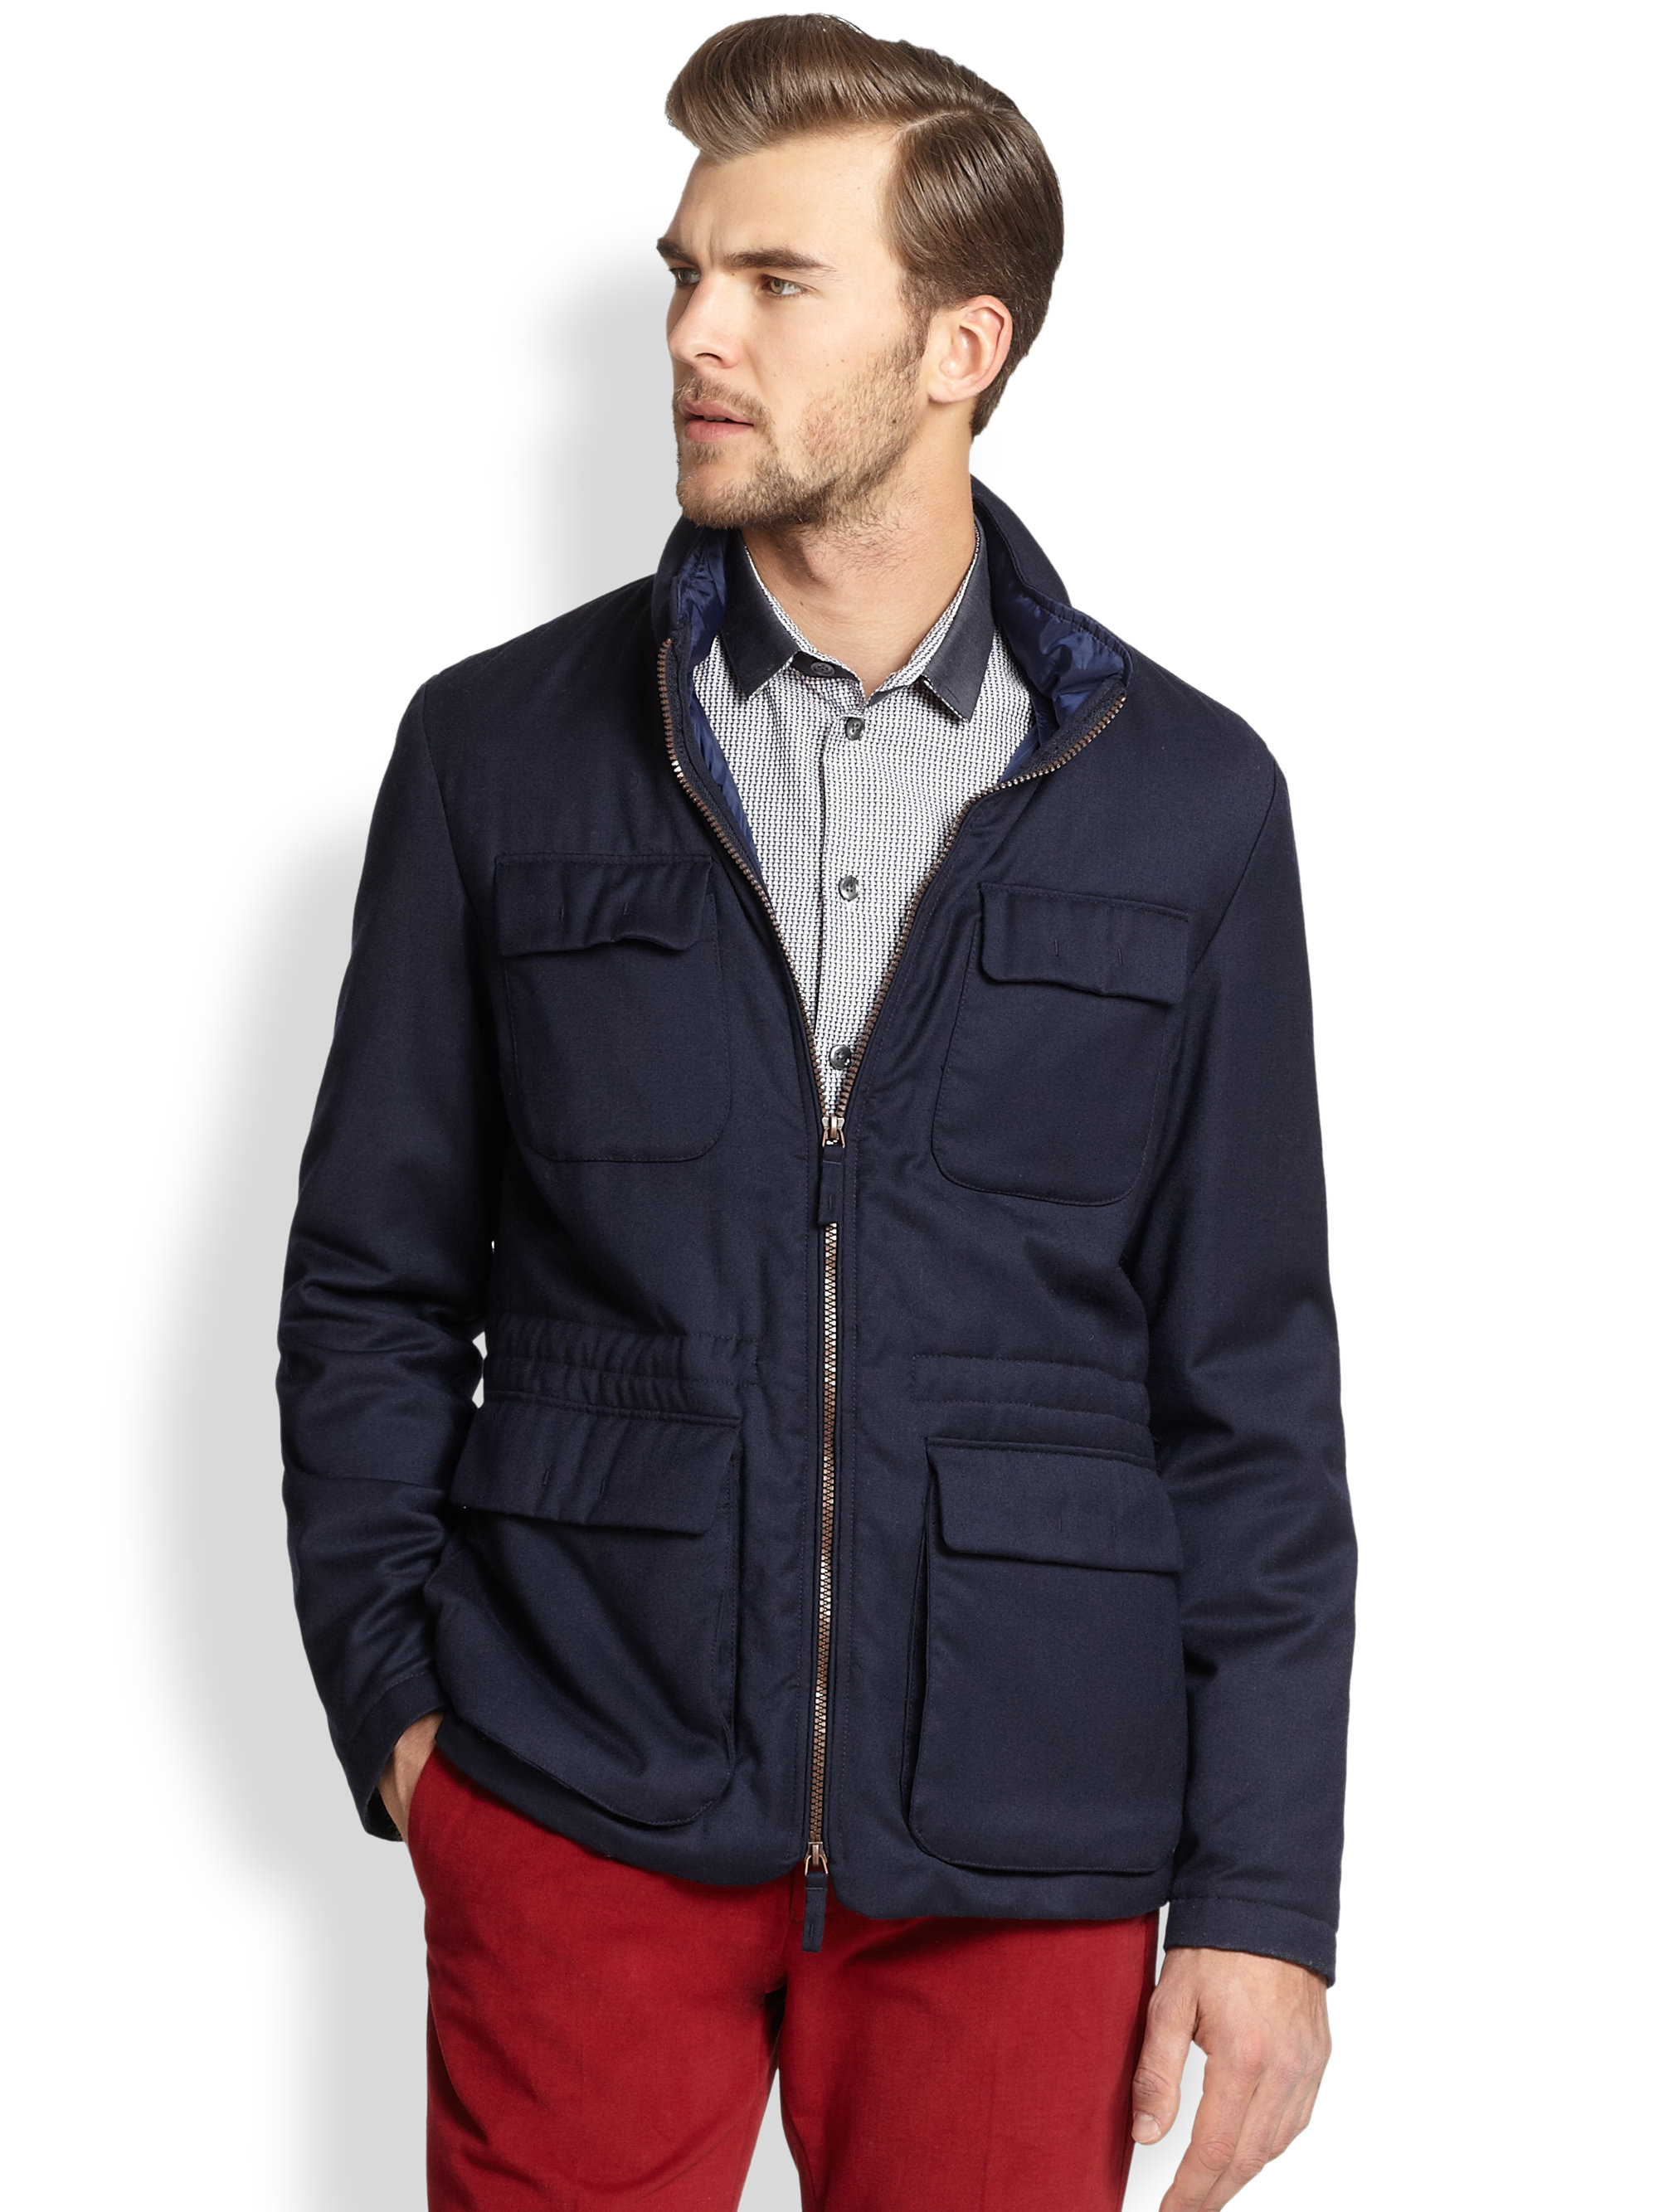 Lyst - Armani Wool & Cashmere Twill Field Jacket in Blue for Men